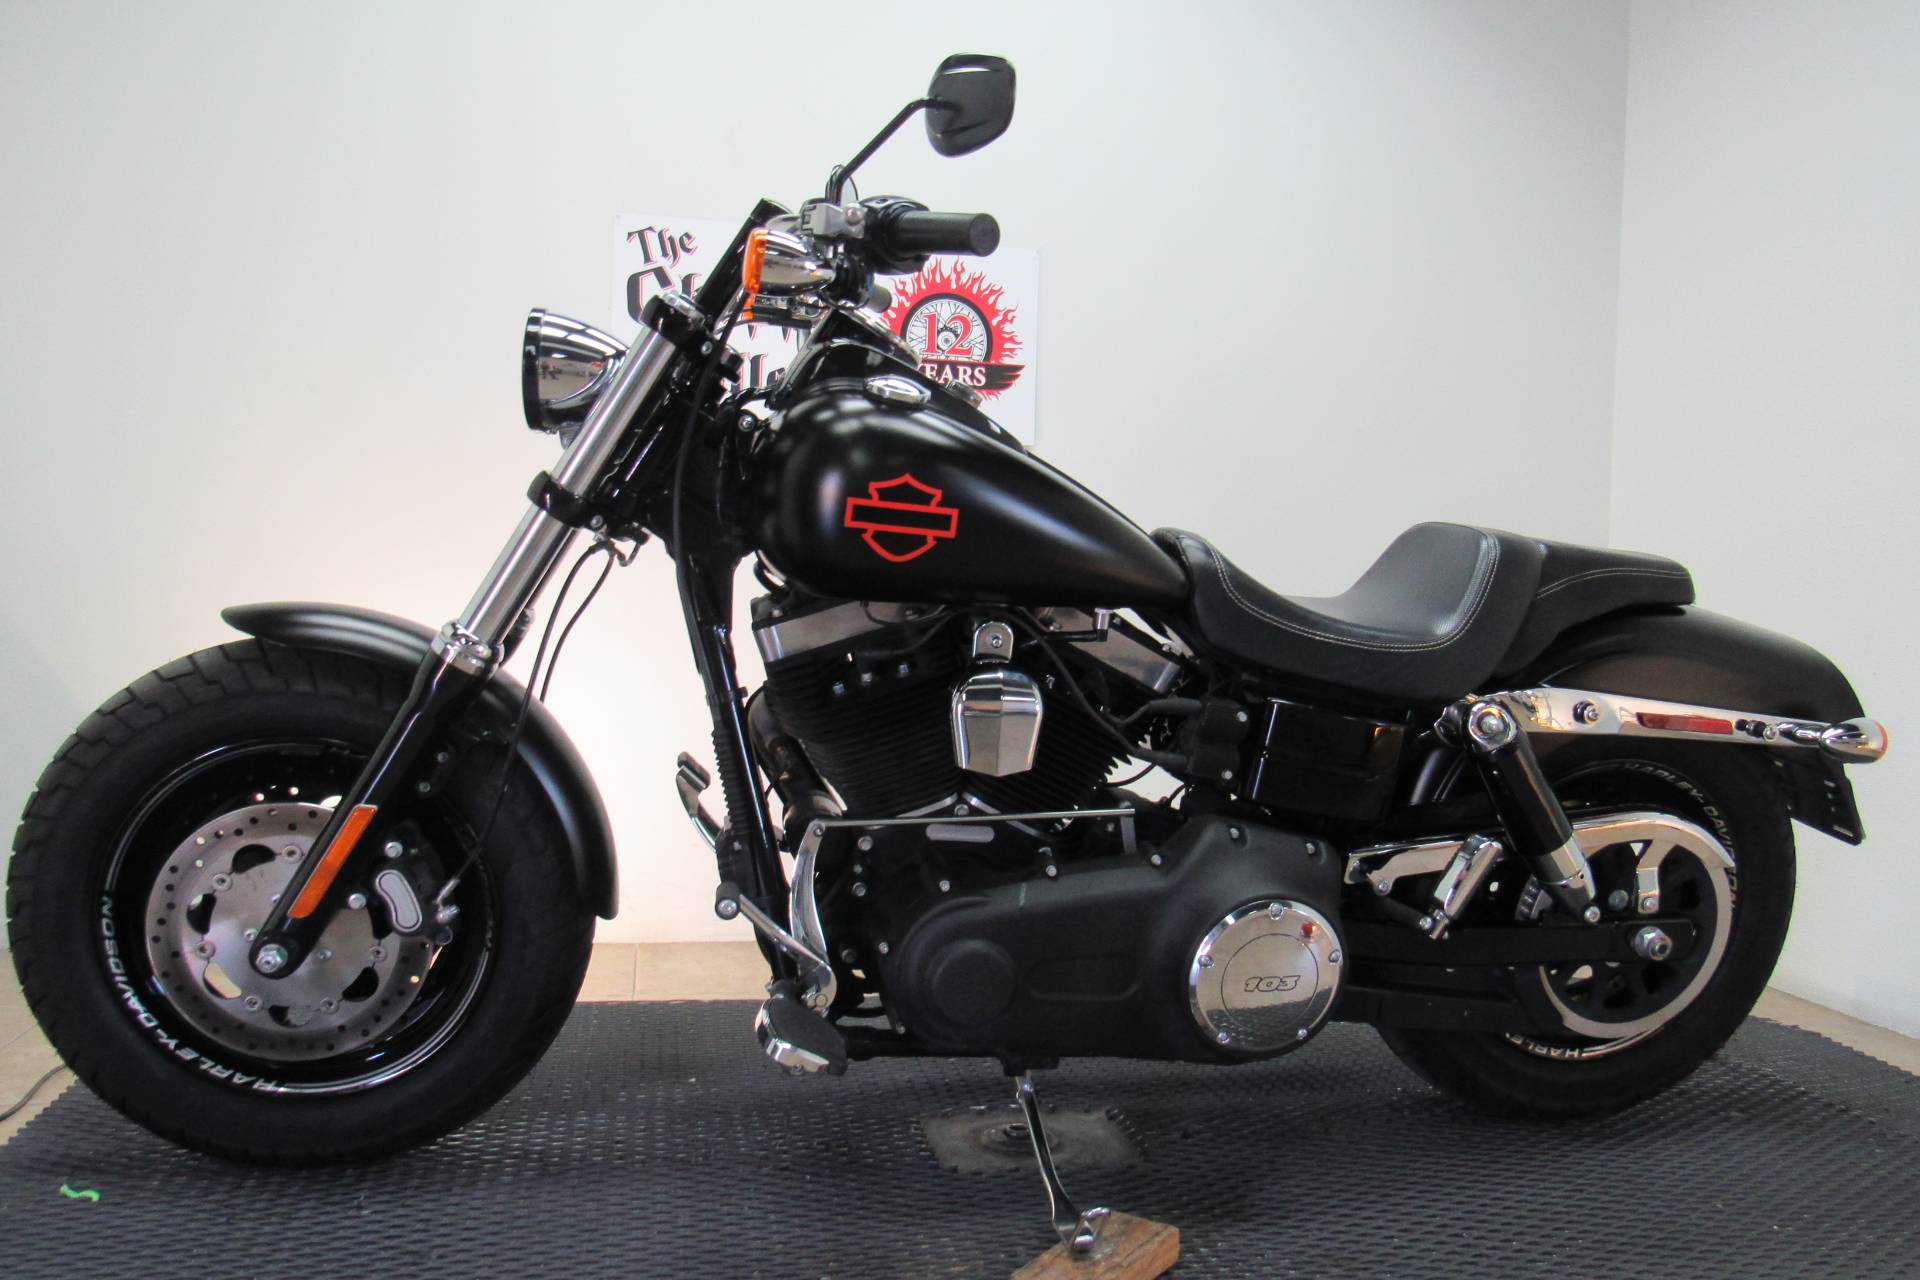 Used 17 Harley Davidson Fat Bob Motorcycles In Temecula Ca Stock Number V